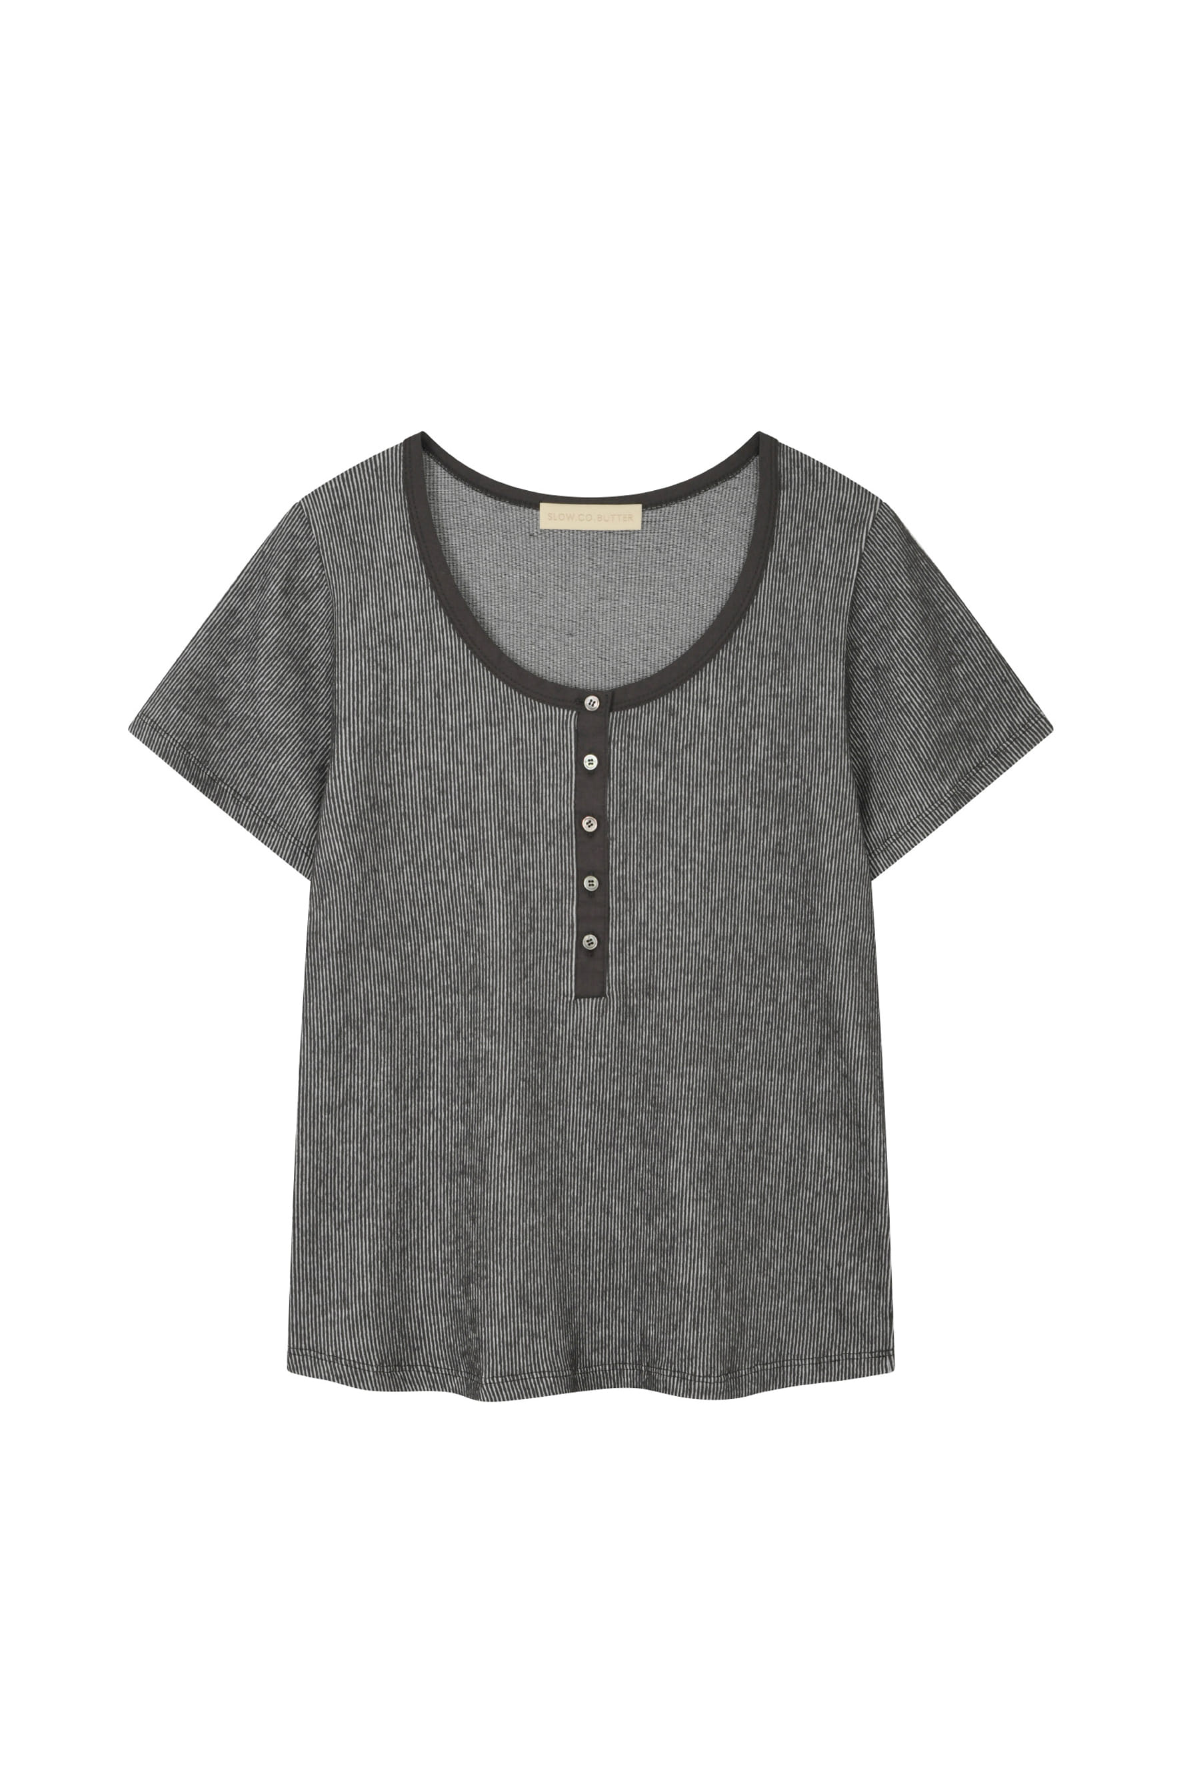 [SLOCO] Ines henley tshirt, charcoal